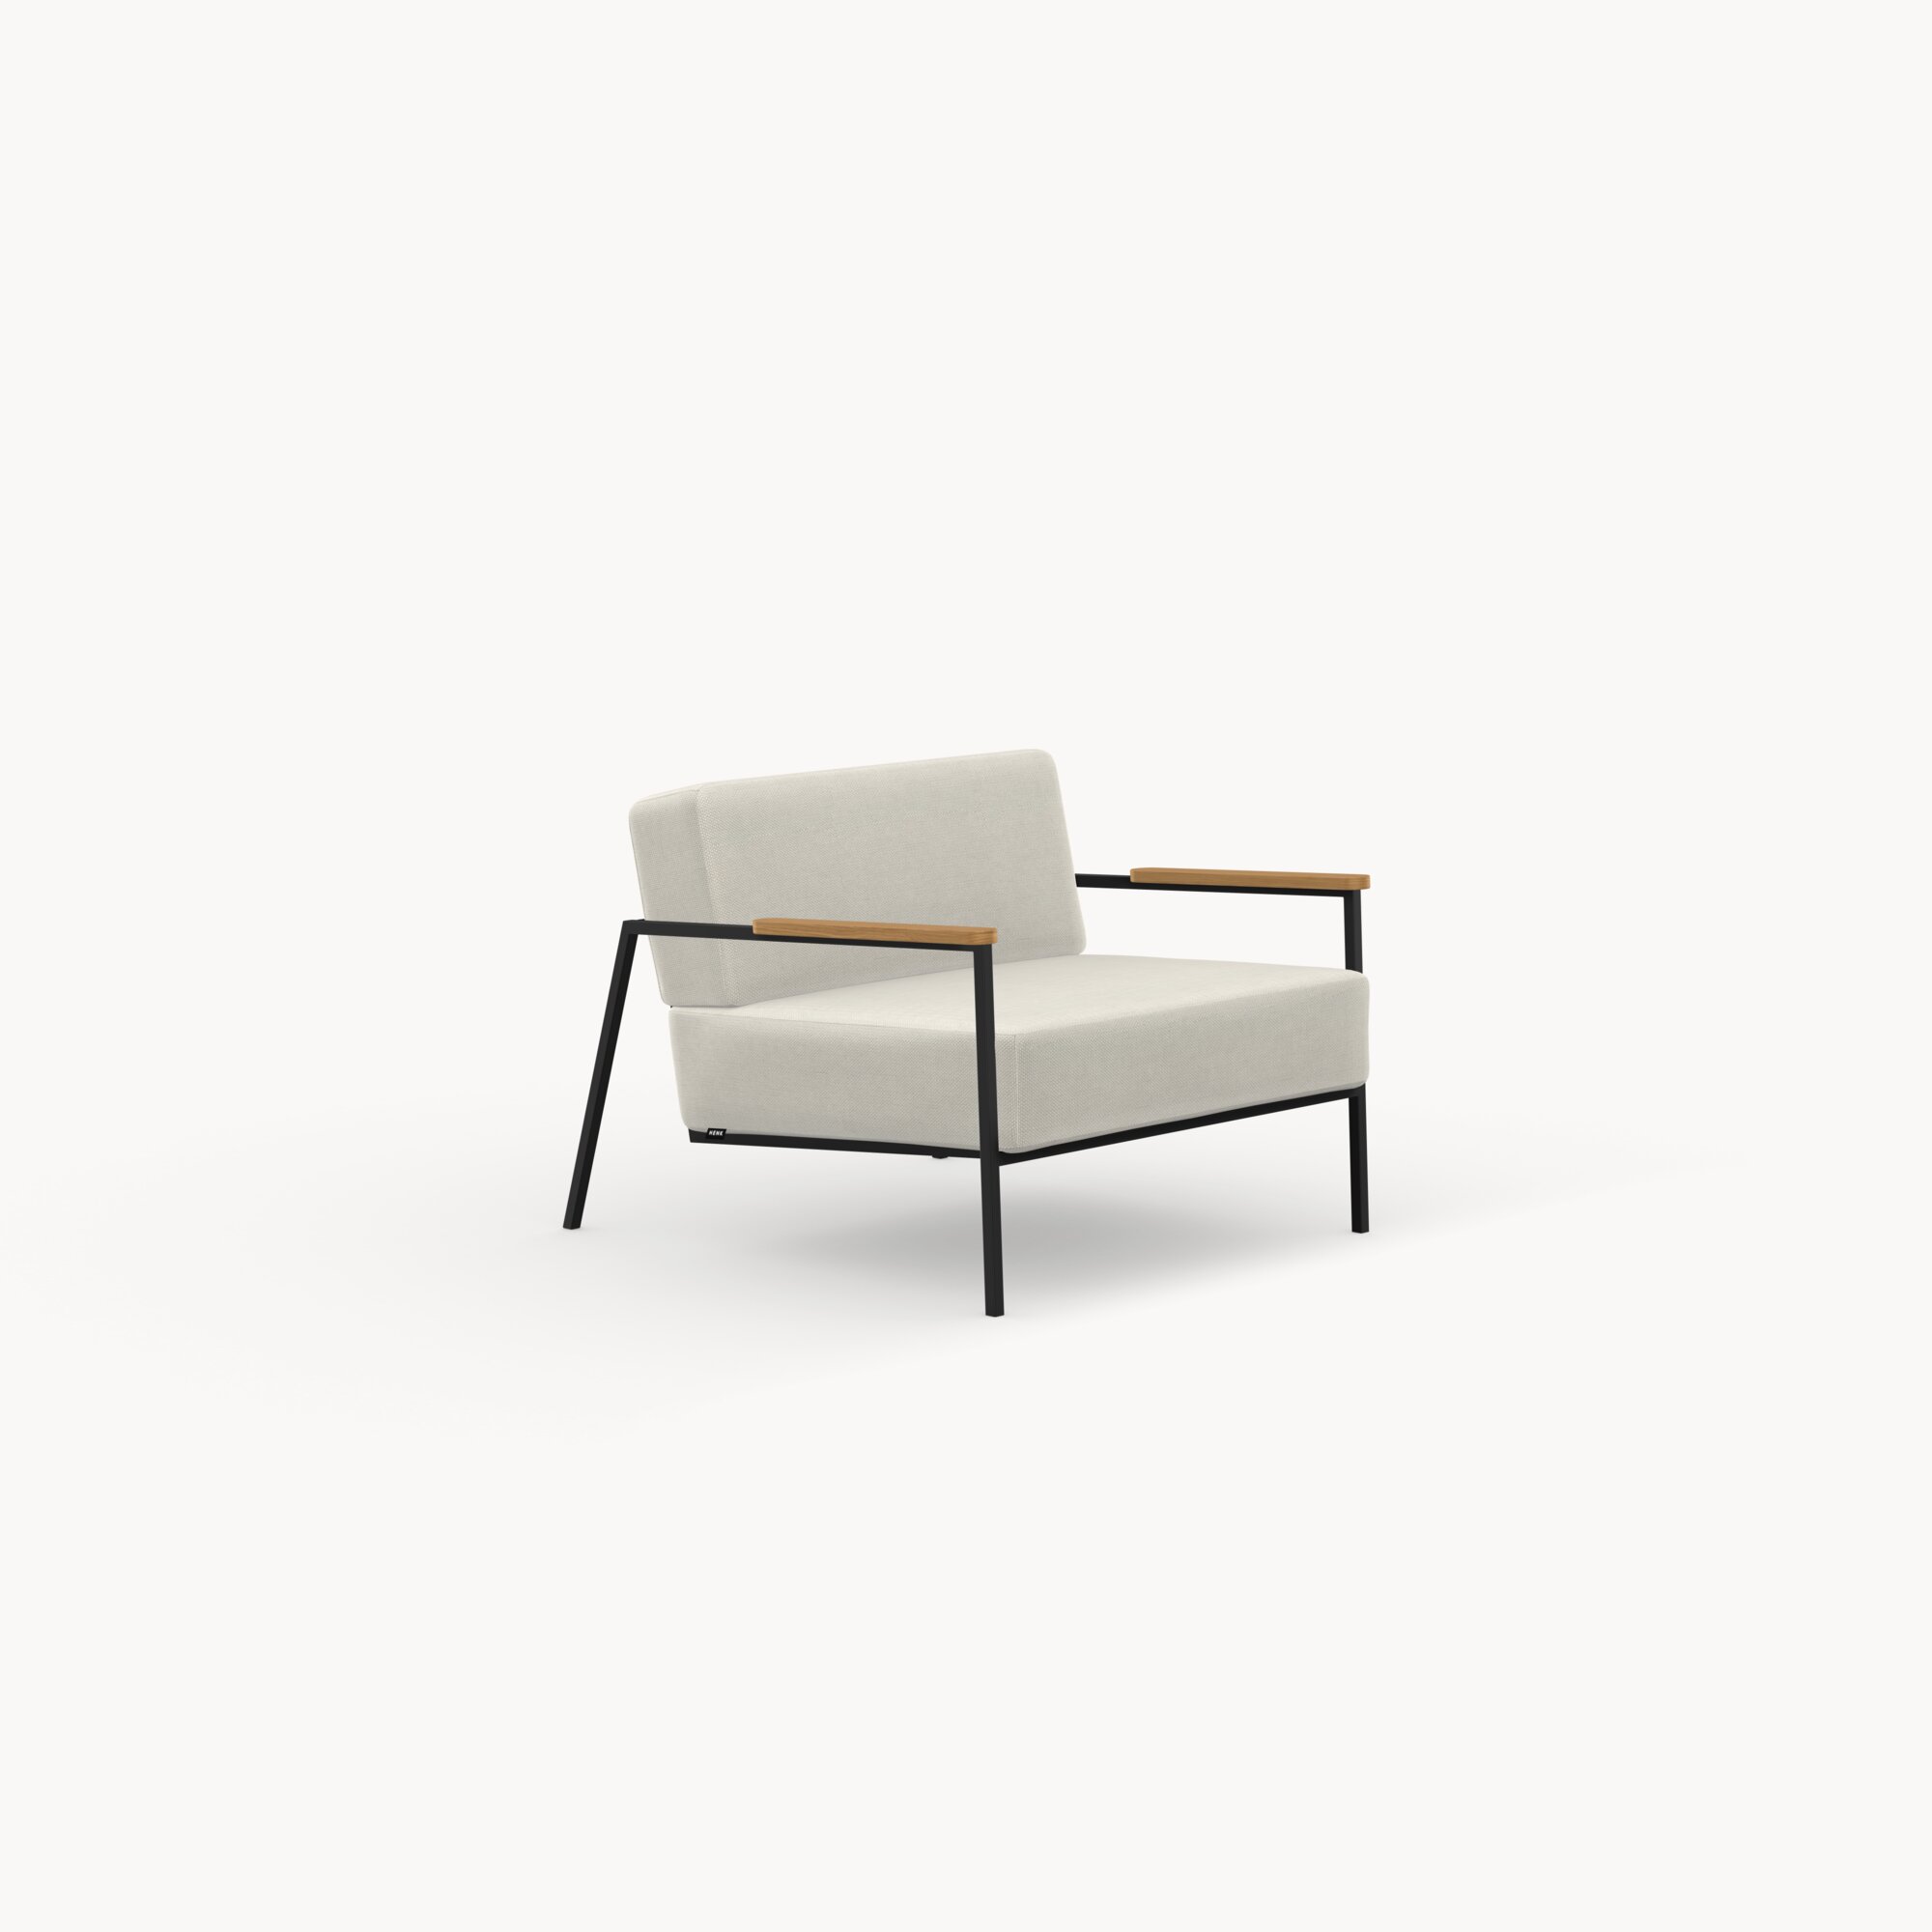 Design modern sofa | Co lounge chair 1 seater calvados multibeige9995 | Studio HENK| 